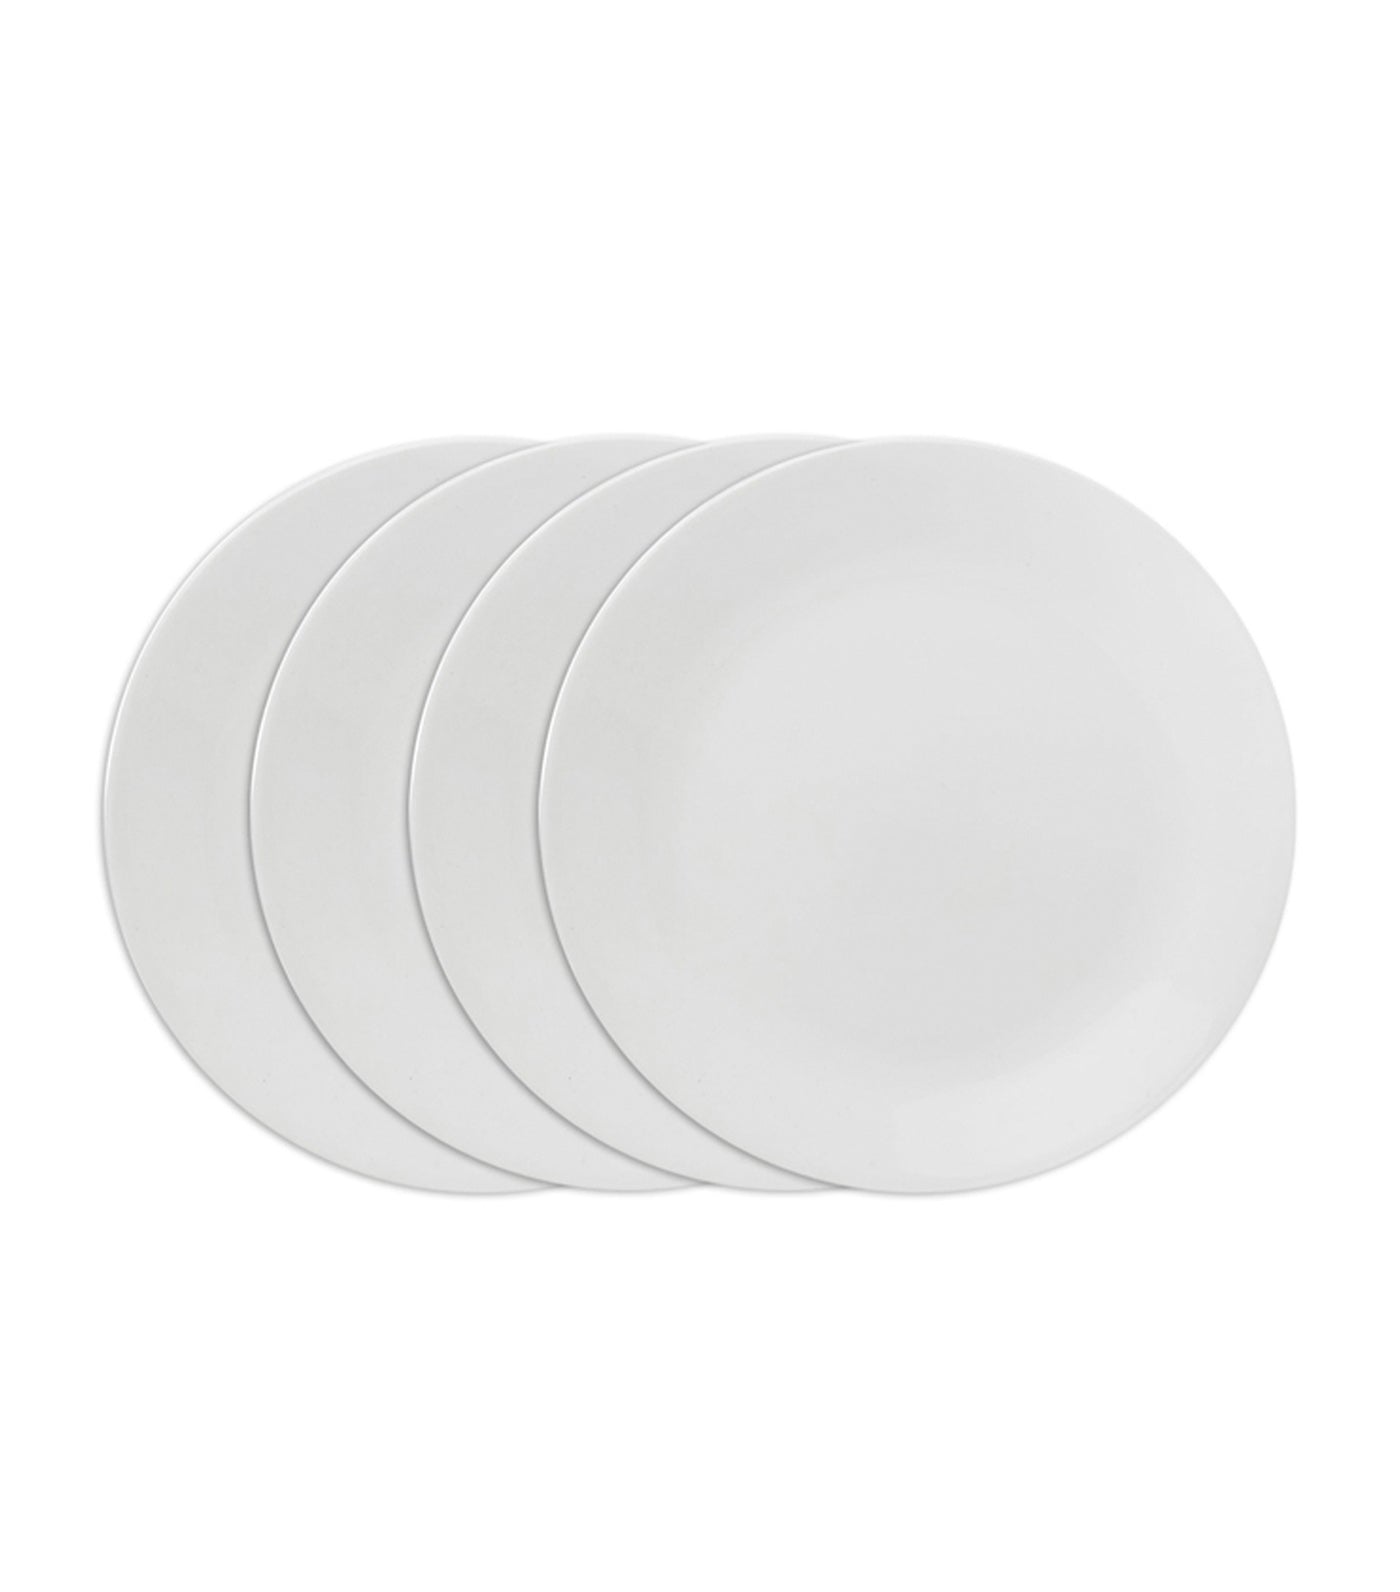 Corelle 4-Piece Luncheon Plate Set - Winter Frost White